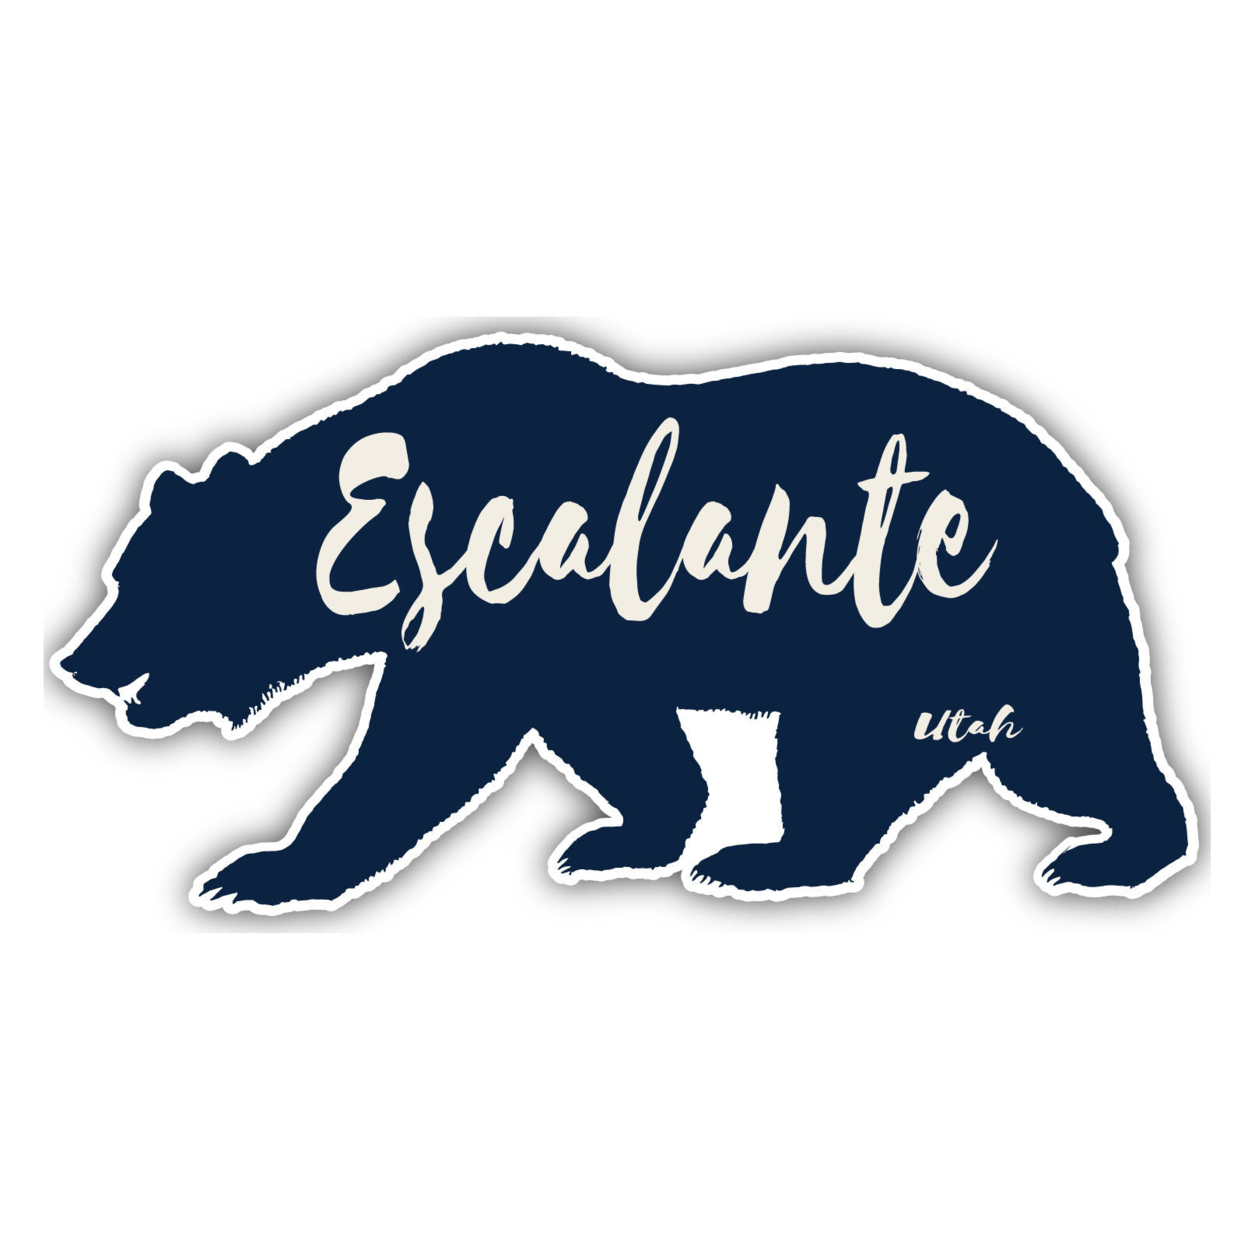 Escalante Utah Souvenir Decorative Stickers (Choose Theme And Size) - Single Unit, 4-Inch, Bear